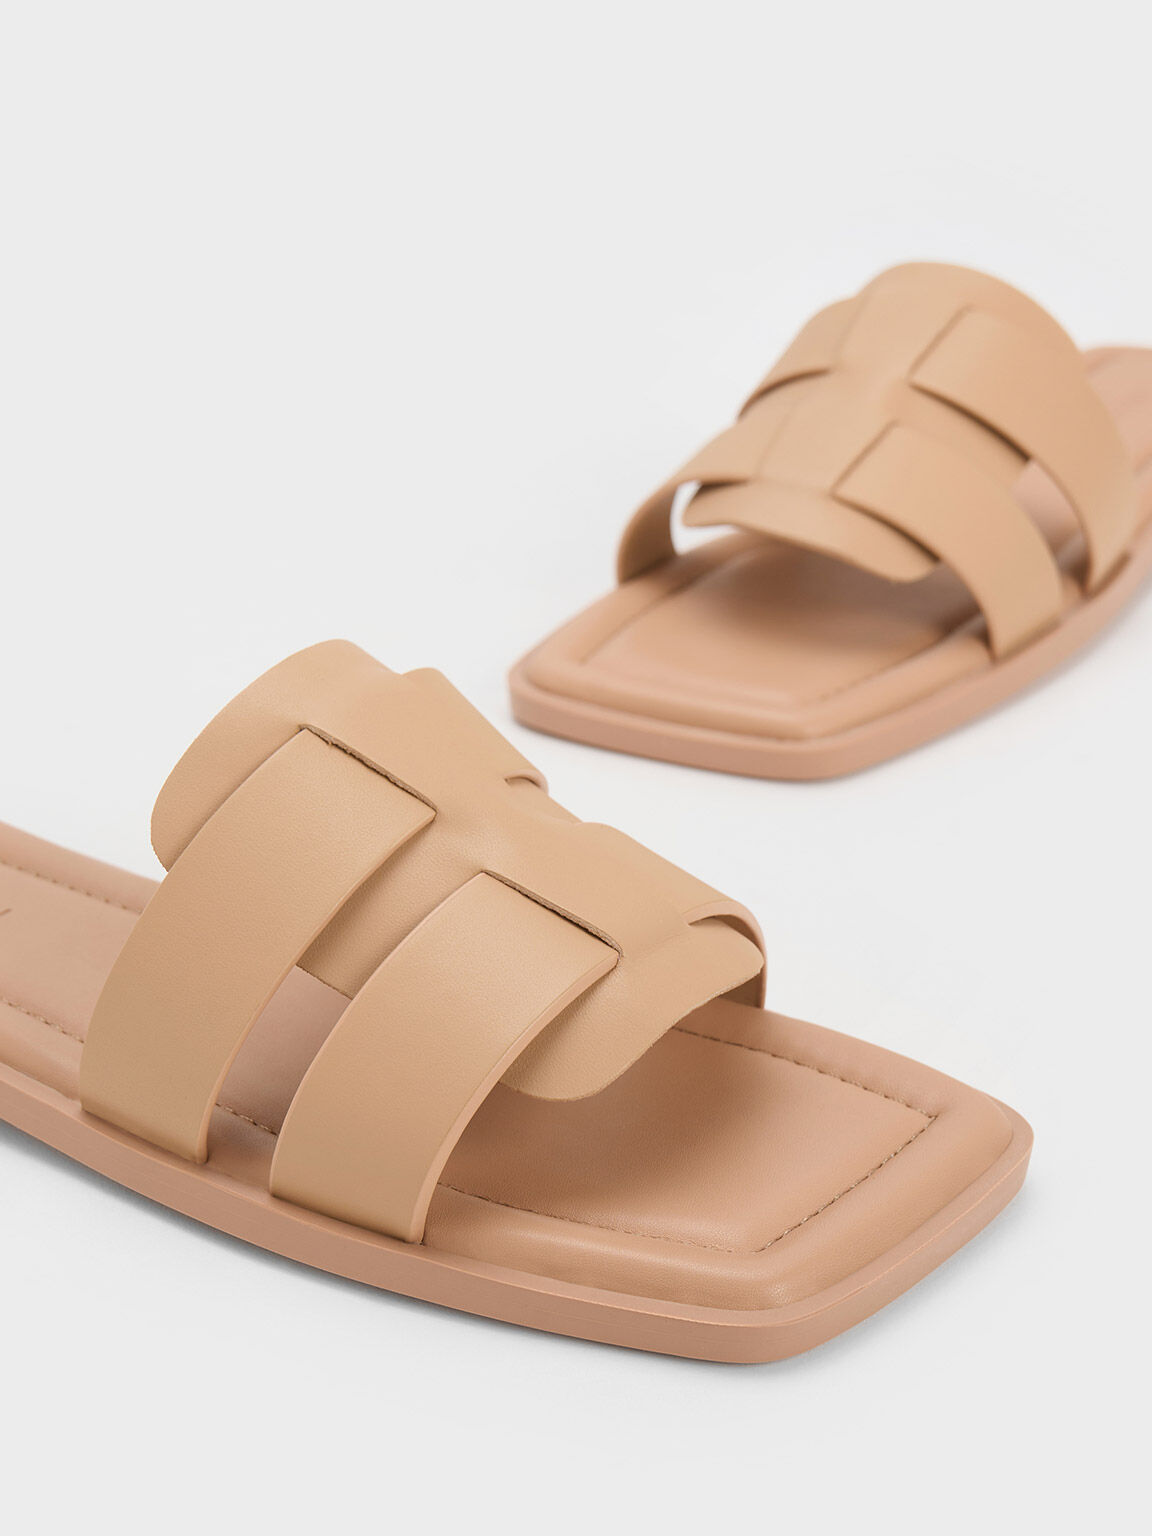 Trichelle Interwoven Leather Slide Sandals - Nude